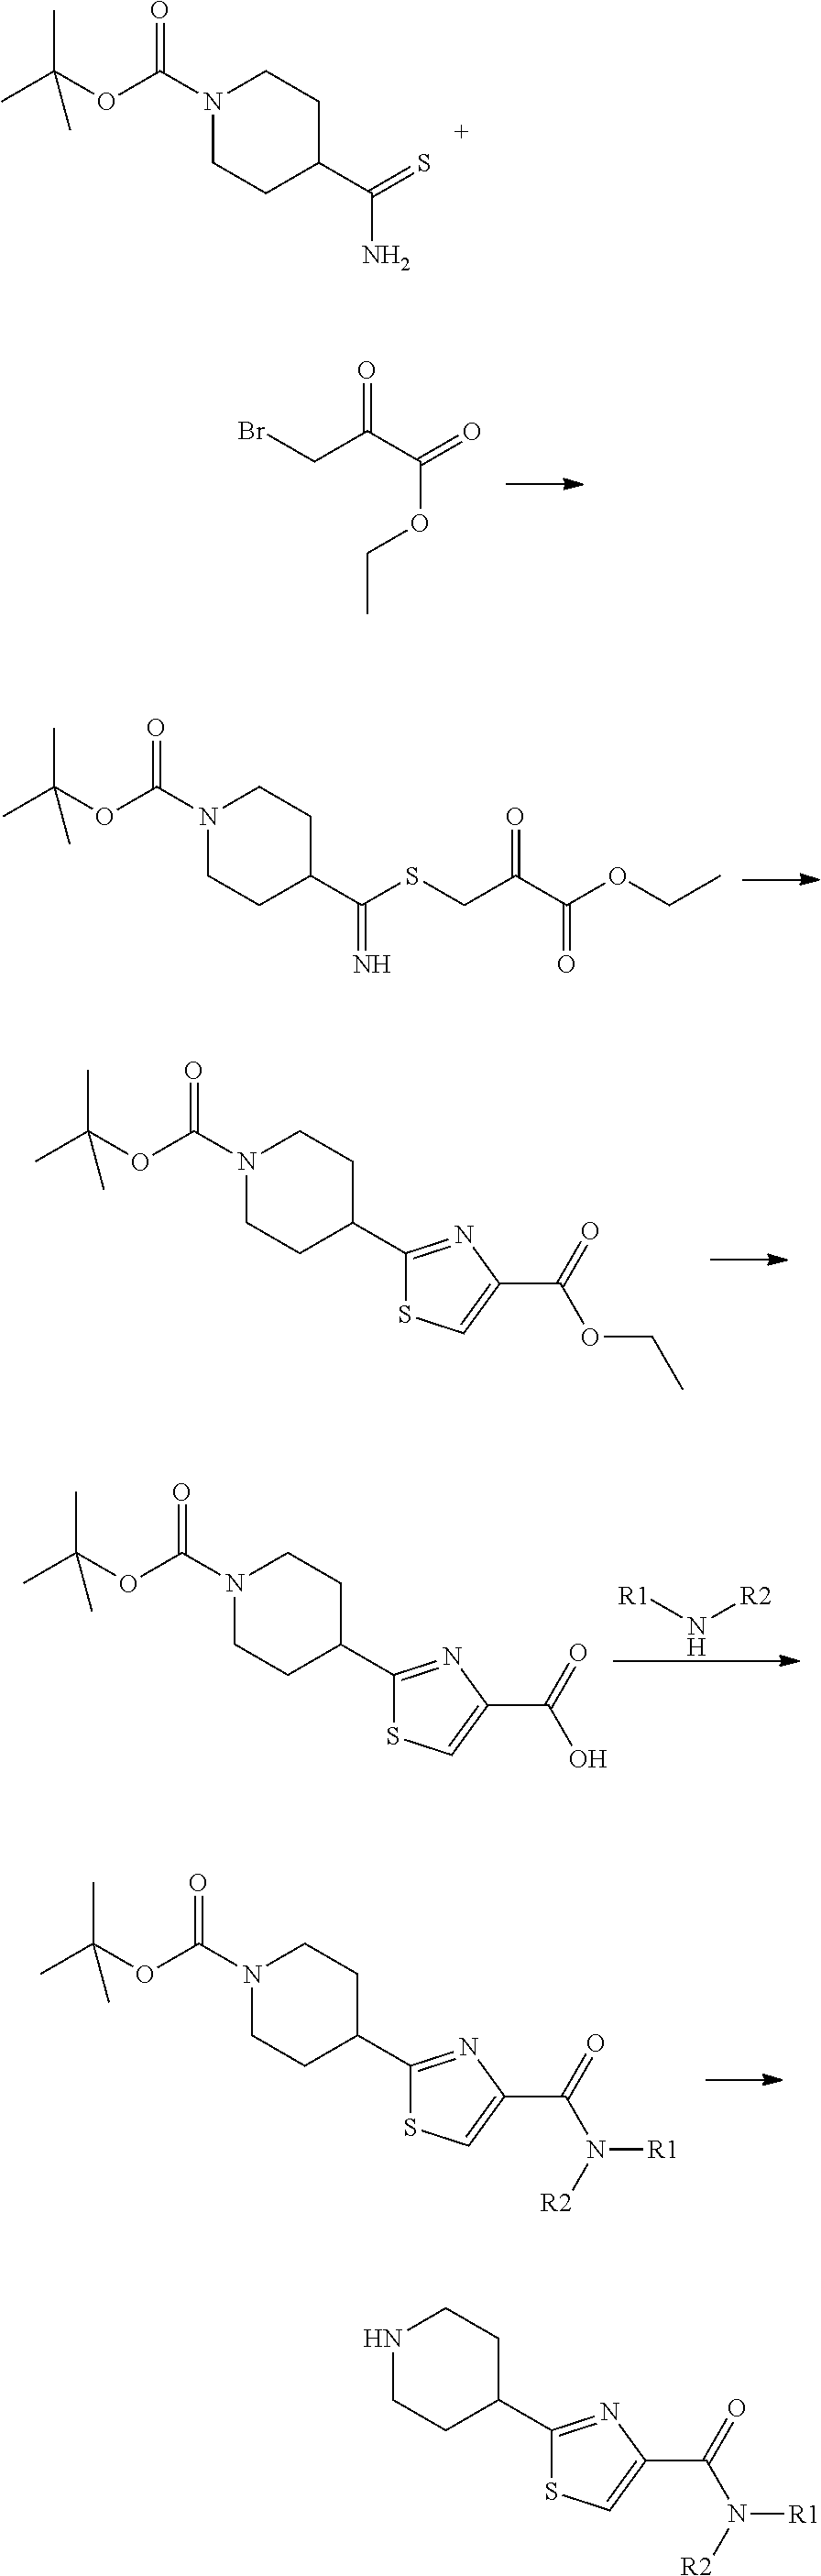 Novel NIP Thiazole Derivatives as Inhibitors of 11-Beta-Hydroxysteroid Dehydroge-Nase-1